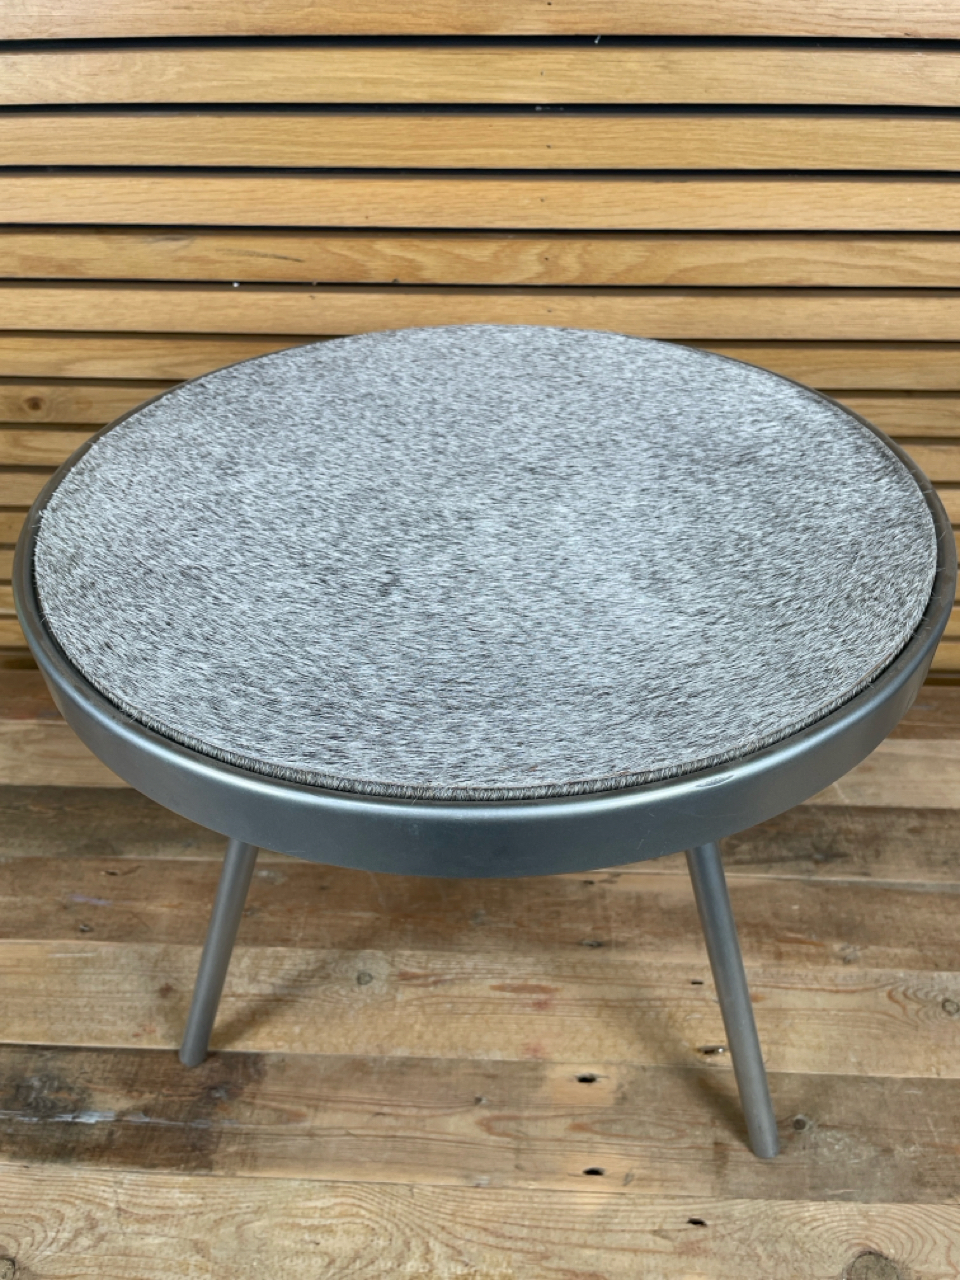 AMARA Circular Side Table Grey Fur Top - Image 2 of 2